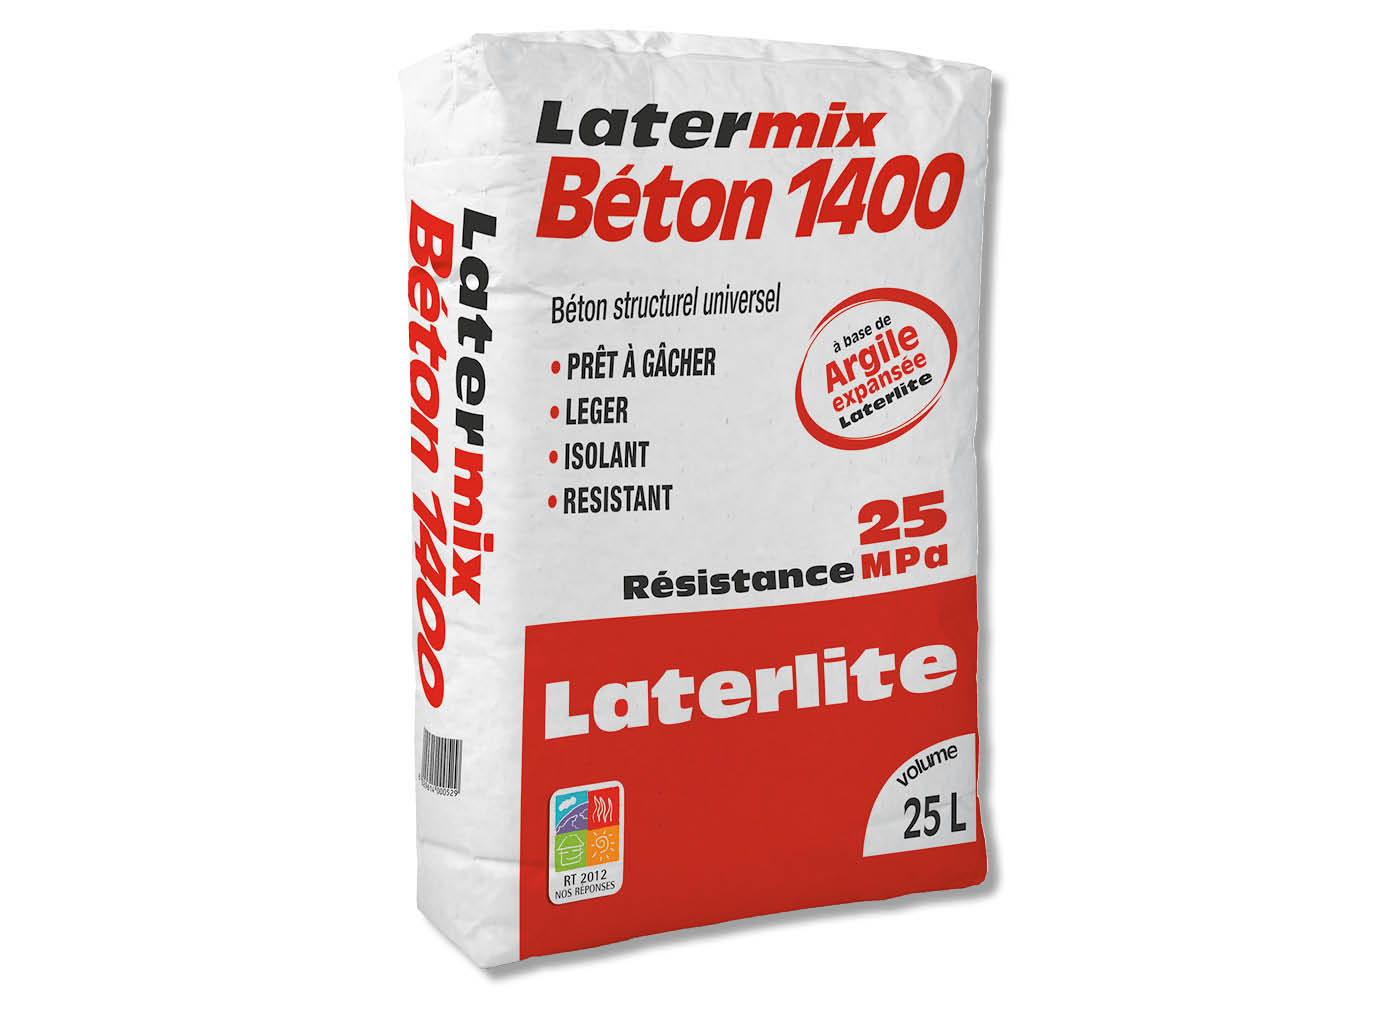 Latermix Beton 1400: lagani konstrukcijski beton